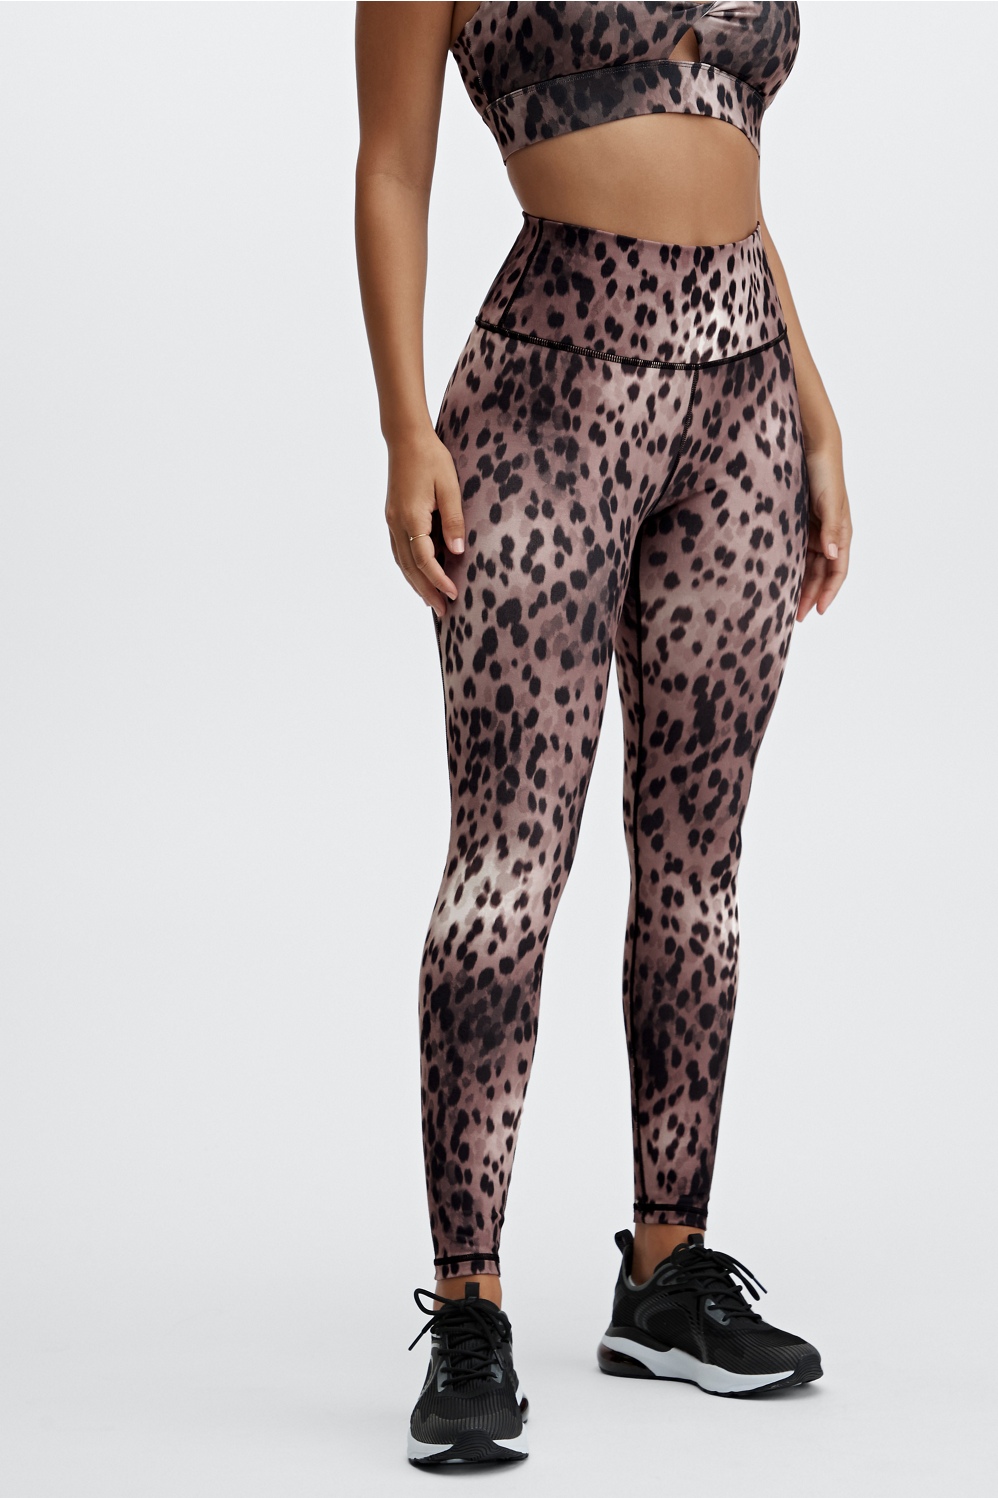 Wholesale LOT of 60 * Women's Wild Fable Leggings Leopard Print Size: M